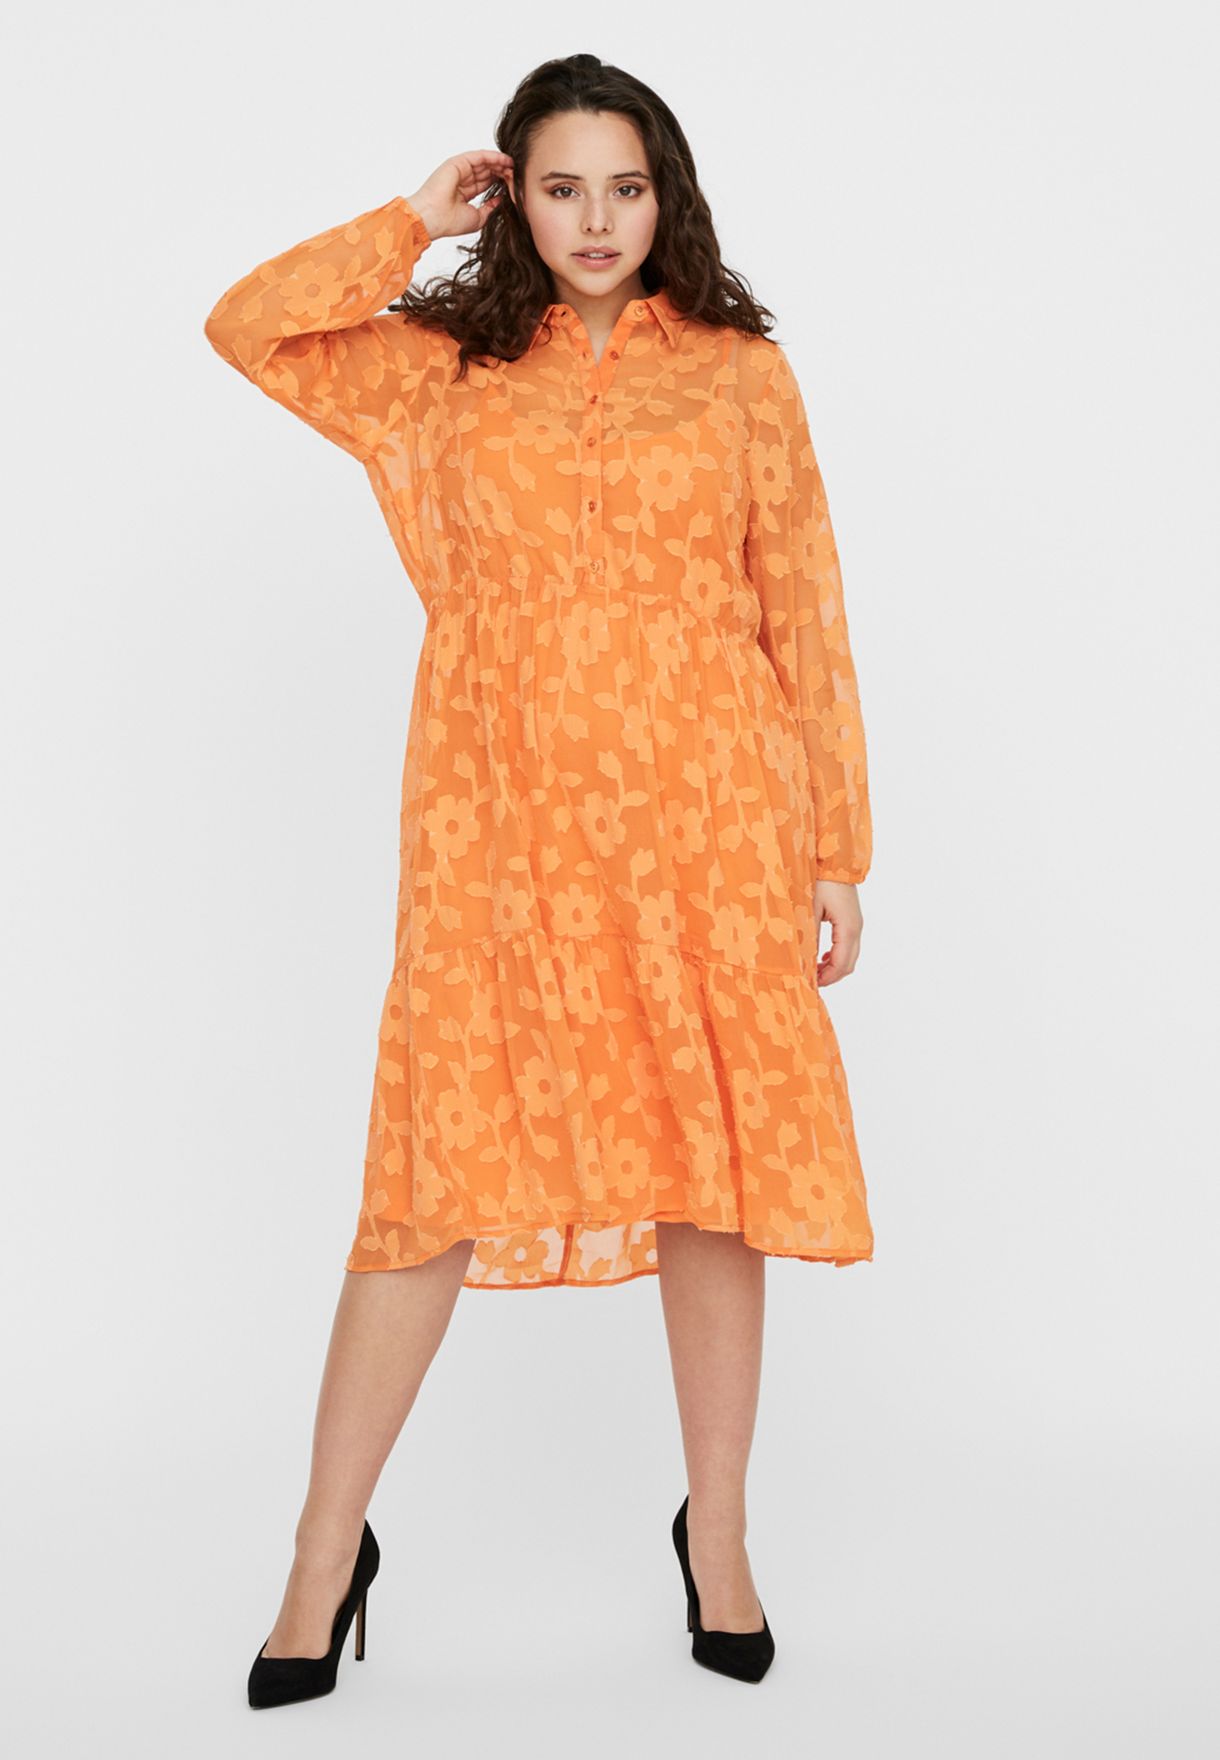 vero moda orange dress